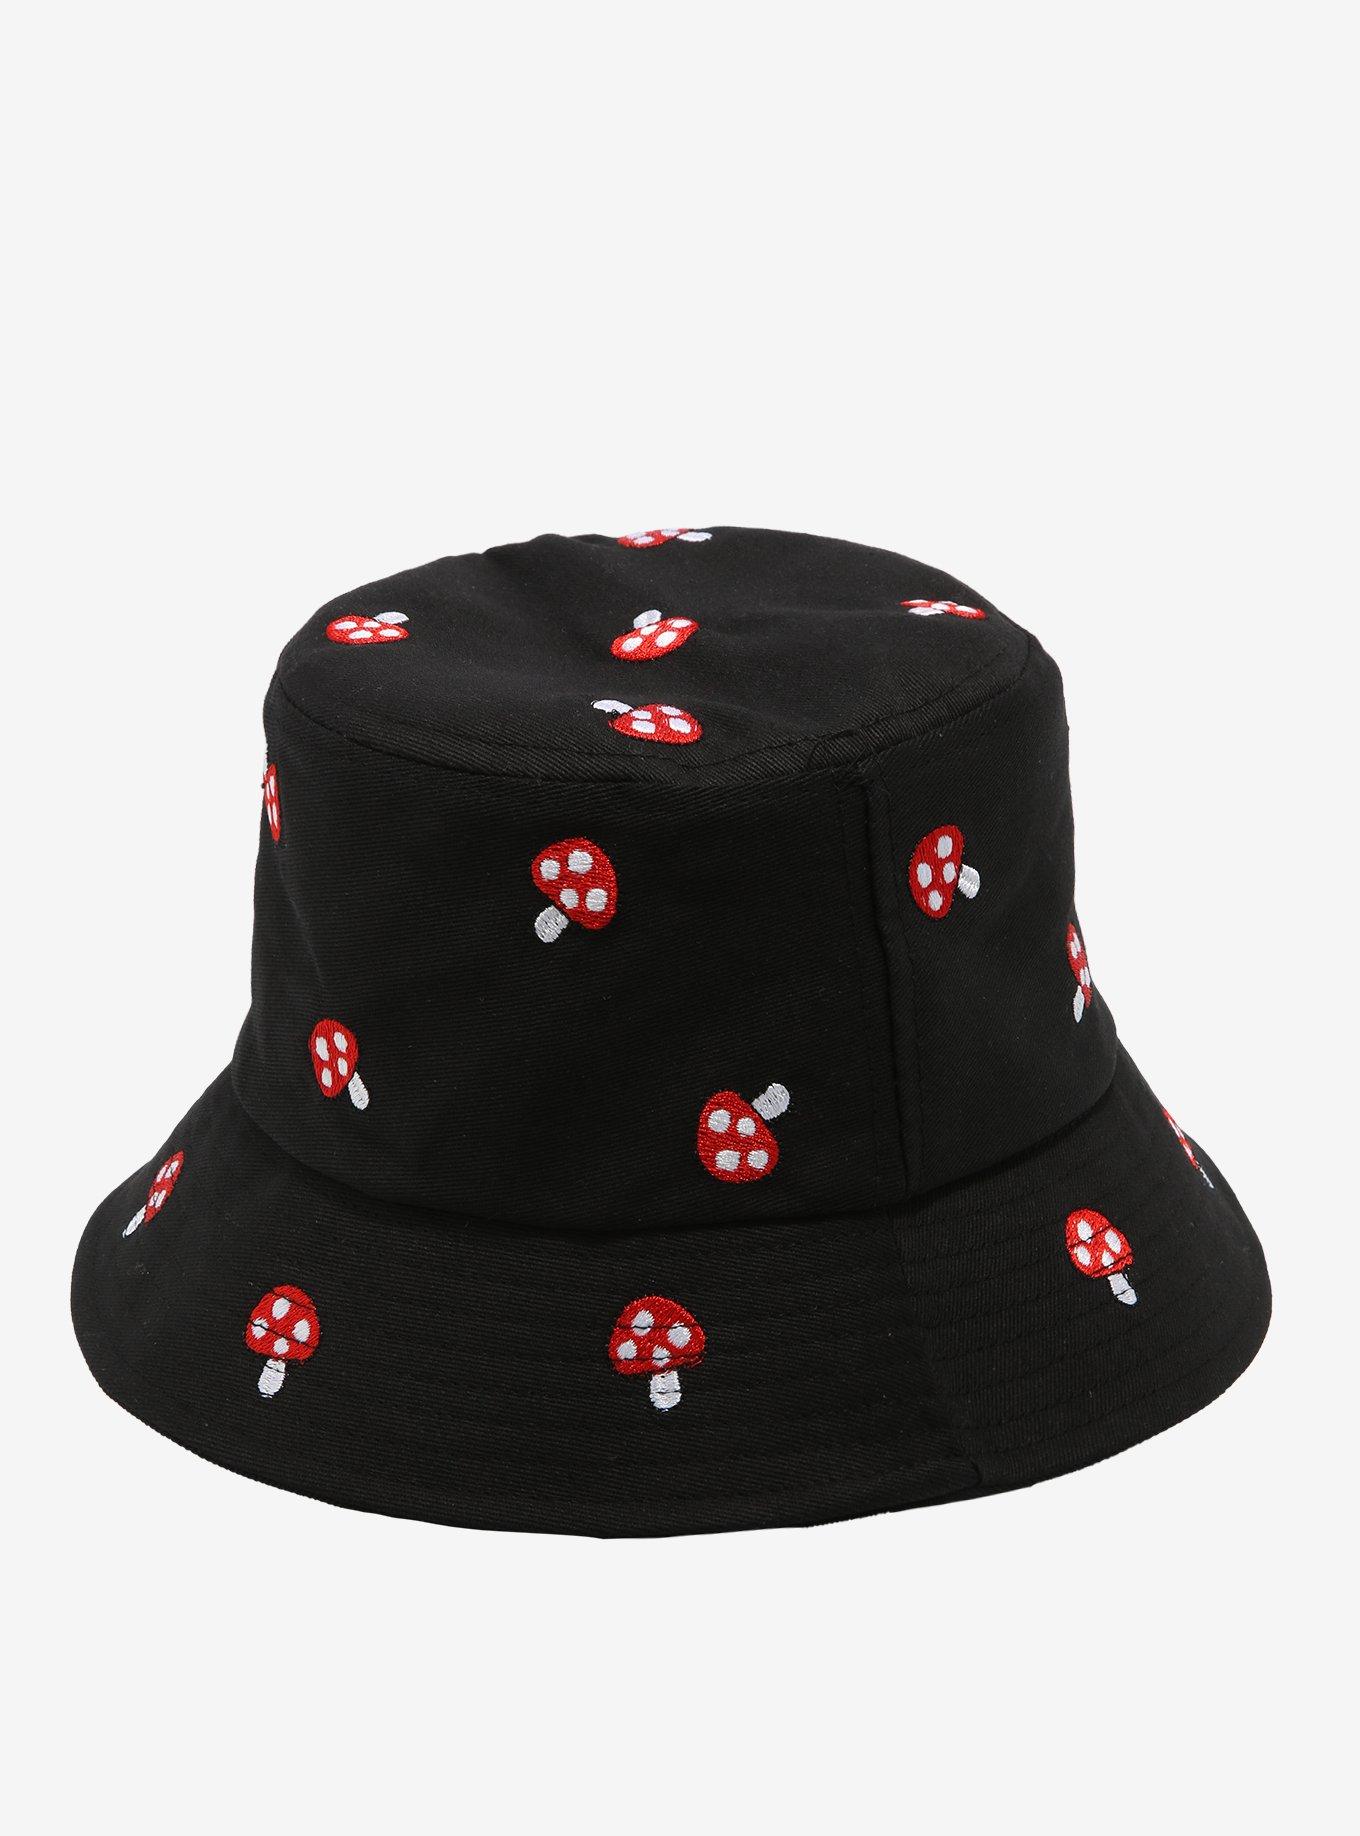 Mushrooms Embroidery Black Bucket Hat Summer Travel Beach Sun Hat Fisherman  Hats Outdoor Cap for Women Men at  Women's Clothing store